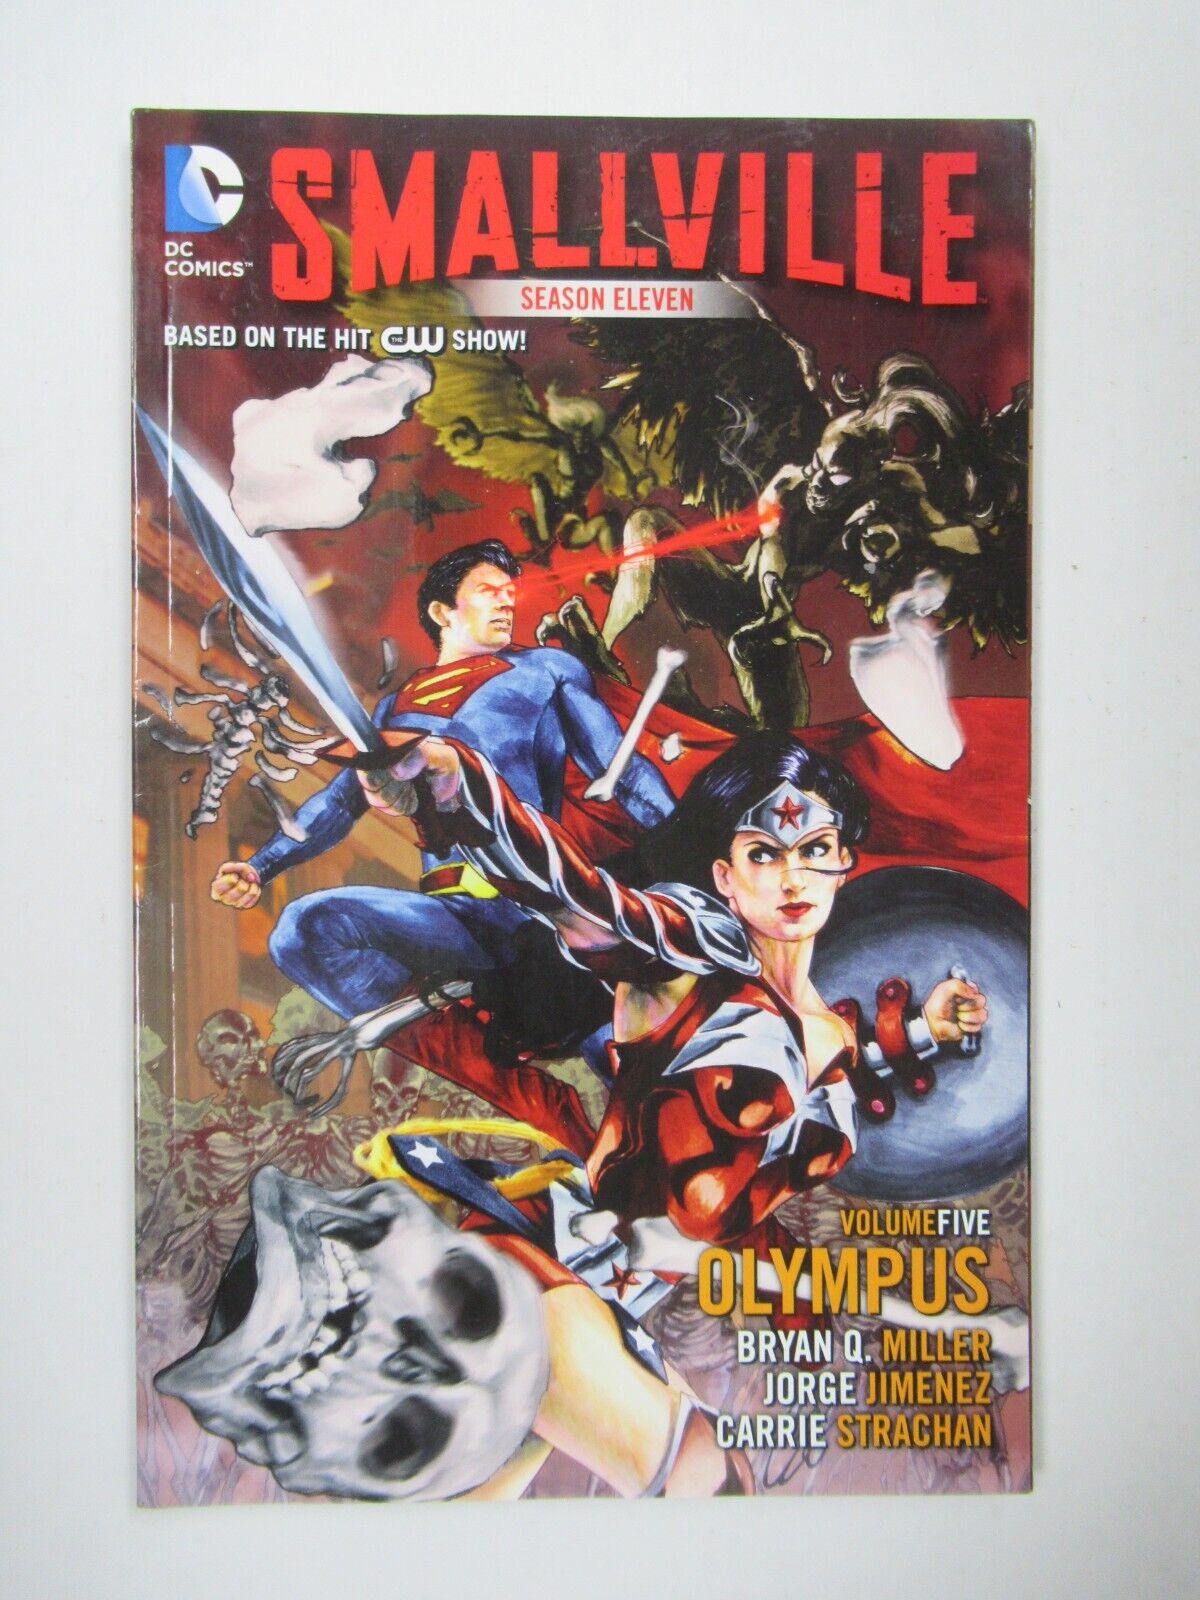 DC Comics Smallville Season Eleven Vol. 5 Olympus TPB Paperback